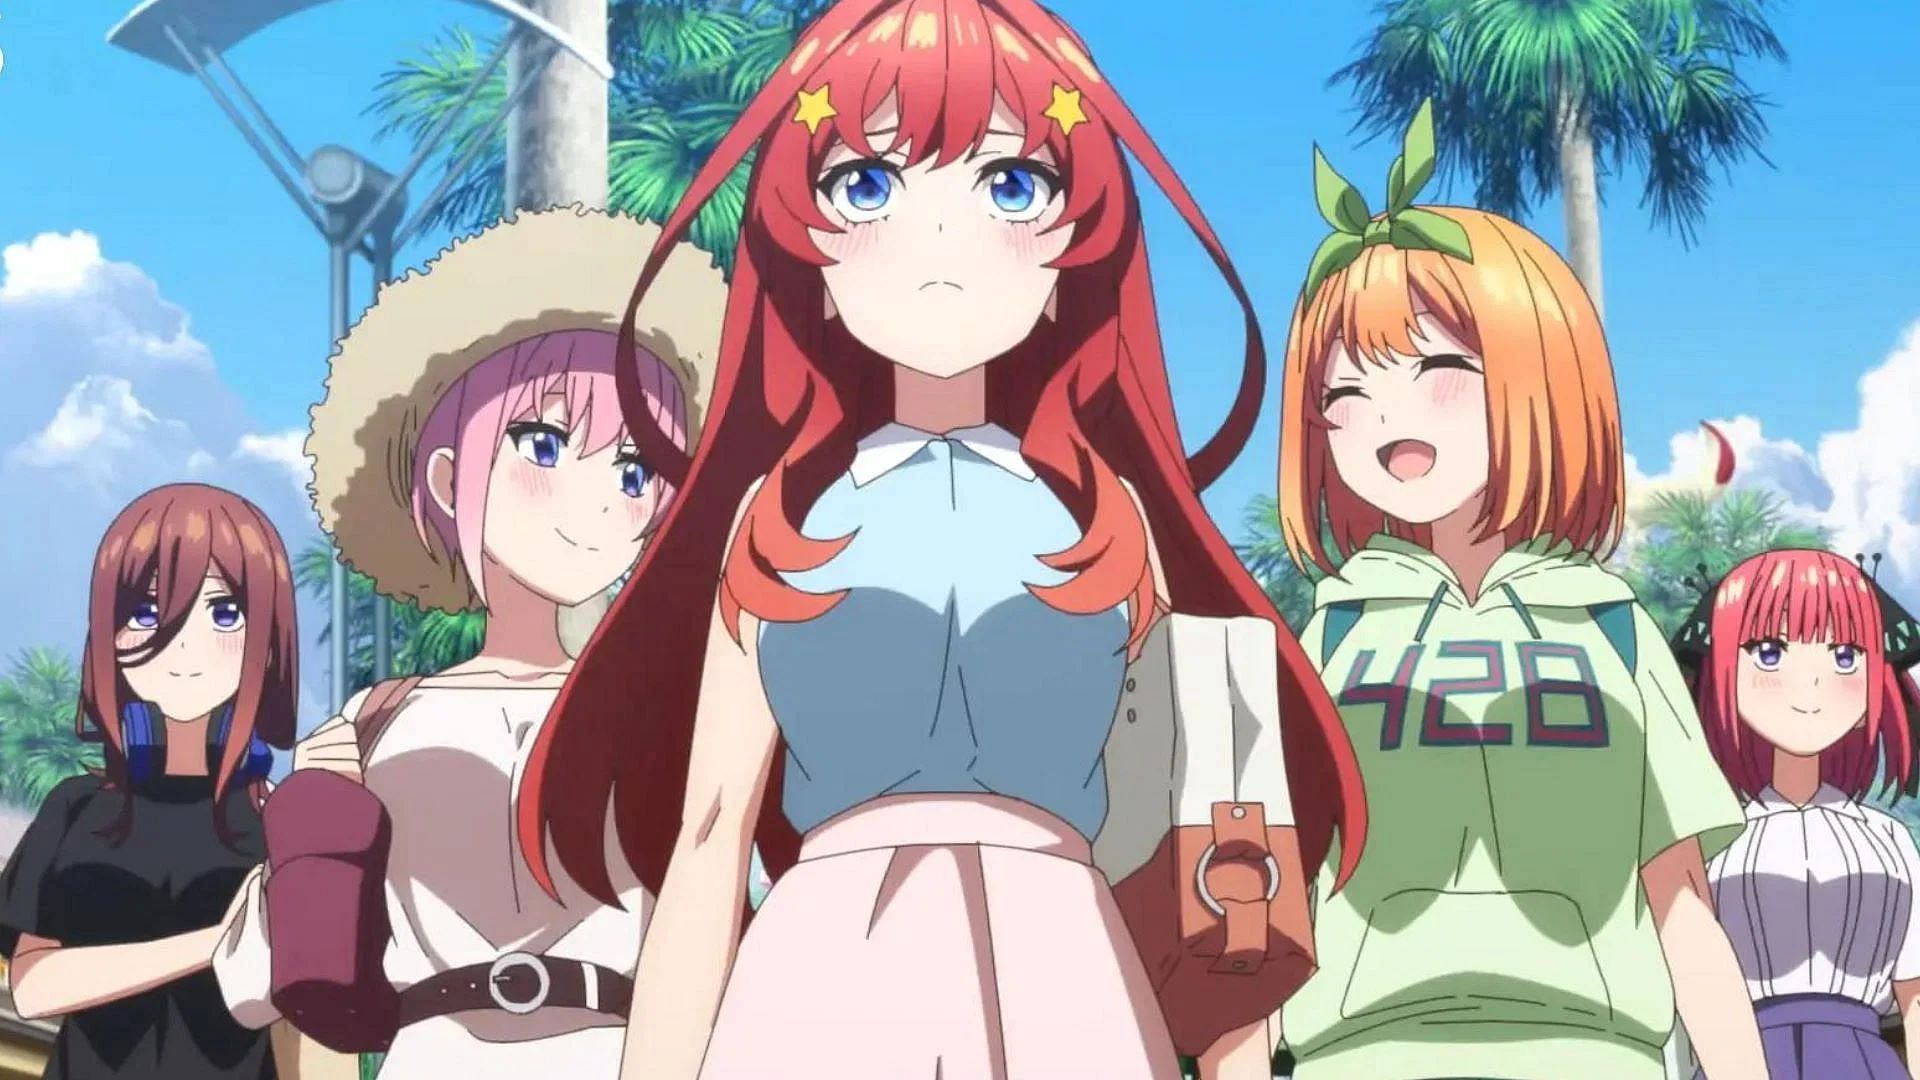 Itsuki, Nino, and others, as seen in the anime (Image via Bibury Animation Studios)